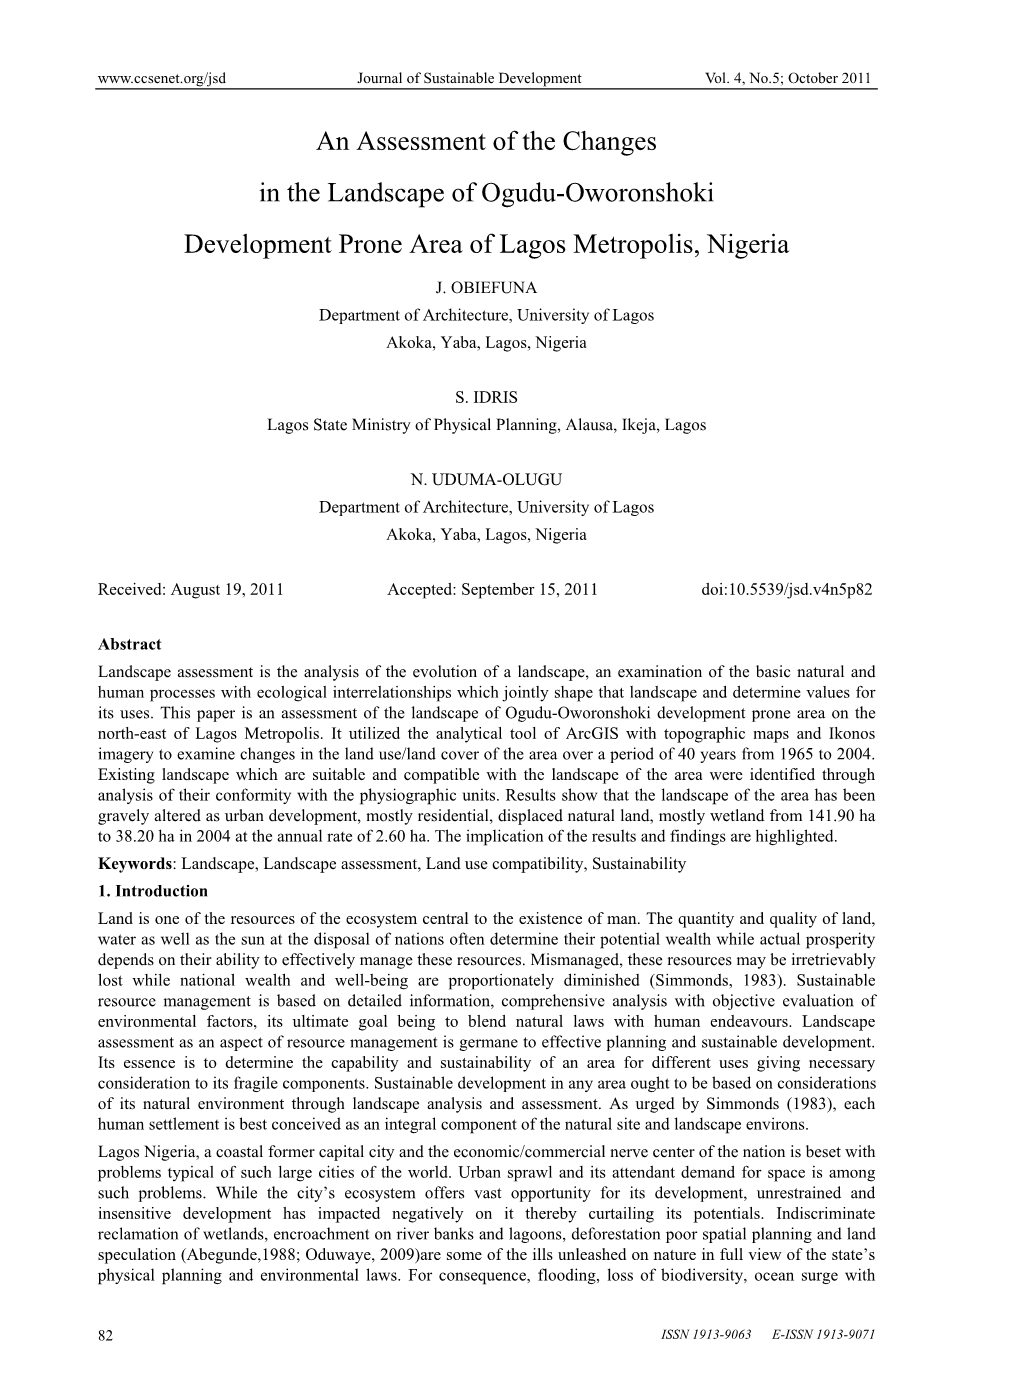 An Assessment of the Changes in the Landscape of Ogudu-Oworonshoki Development Prone Area of Lagos Metropolis, Nigeria